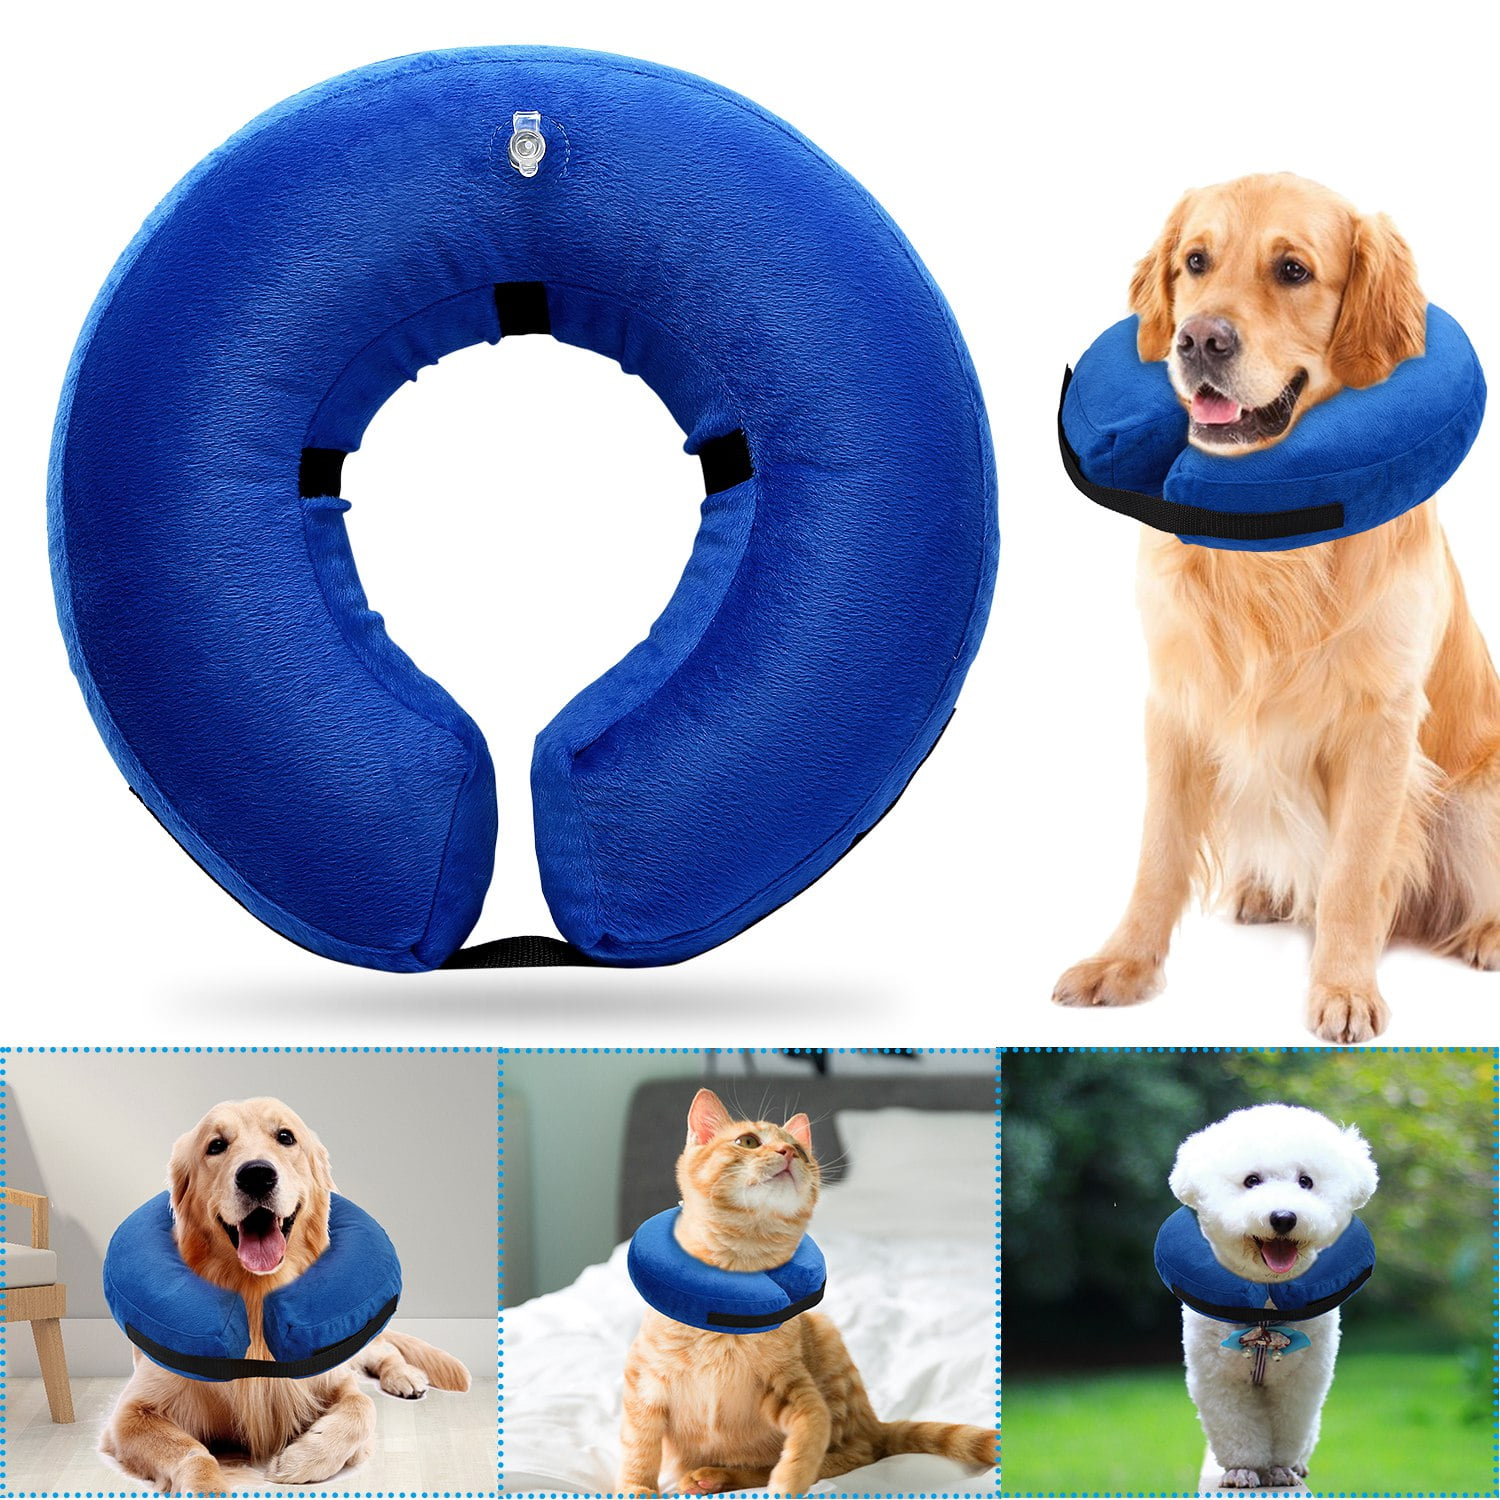 Dog Inflatable Collar - Walmart.com 